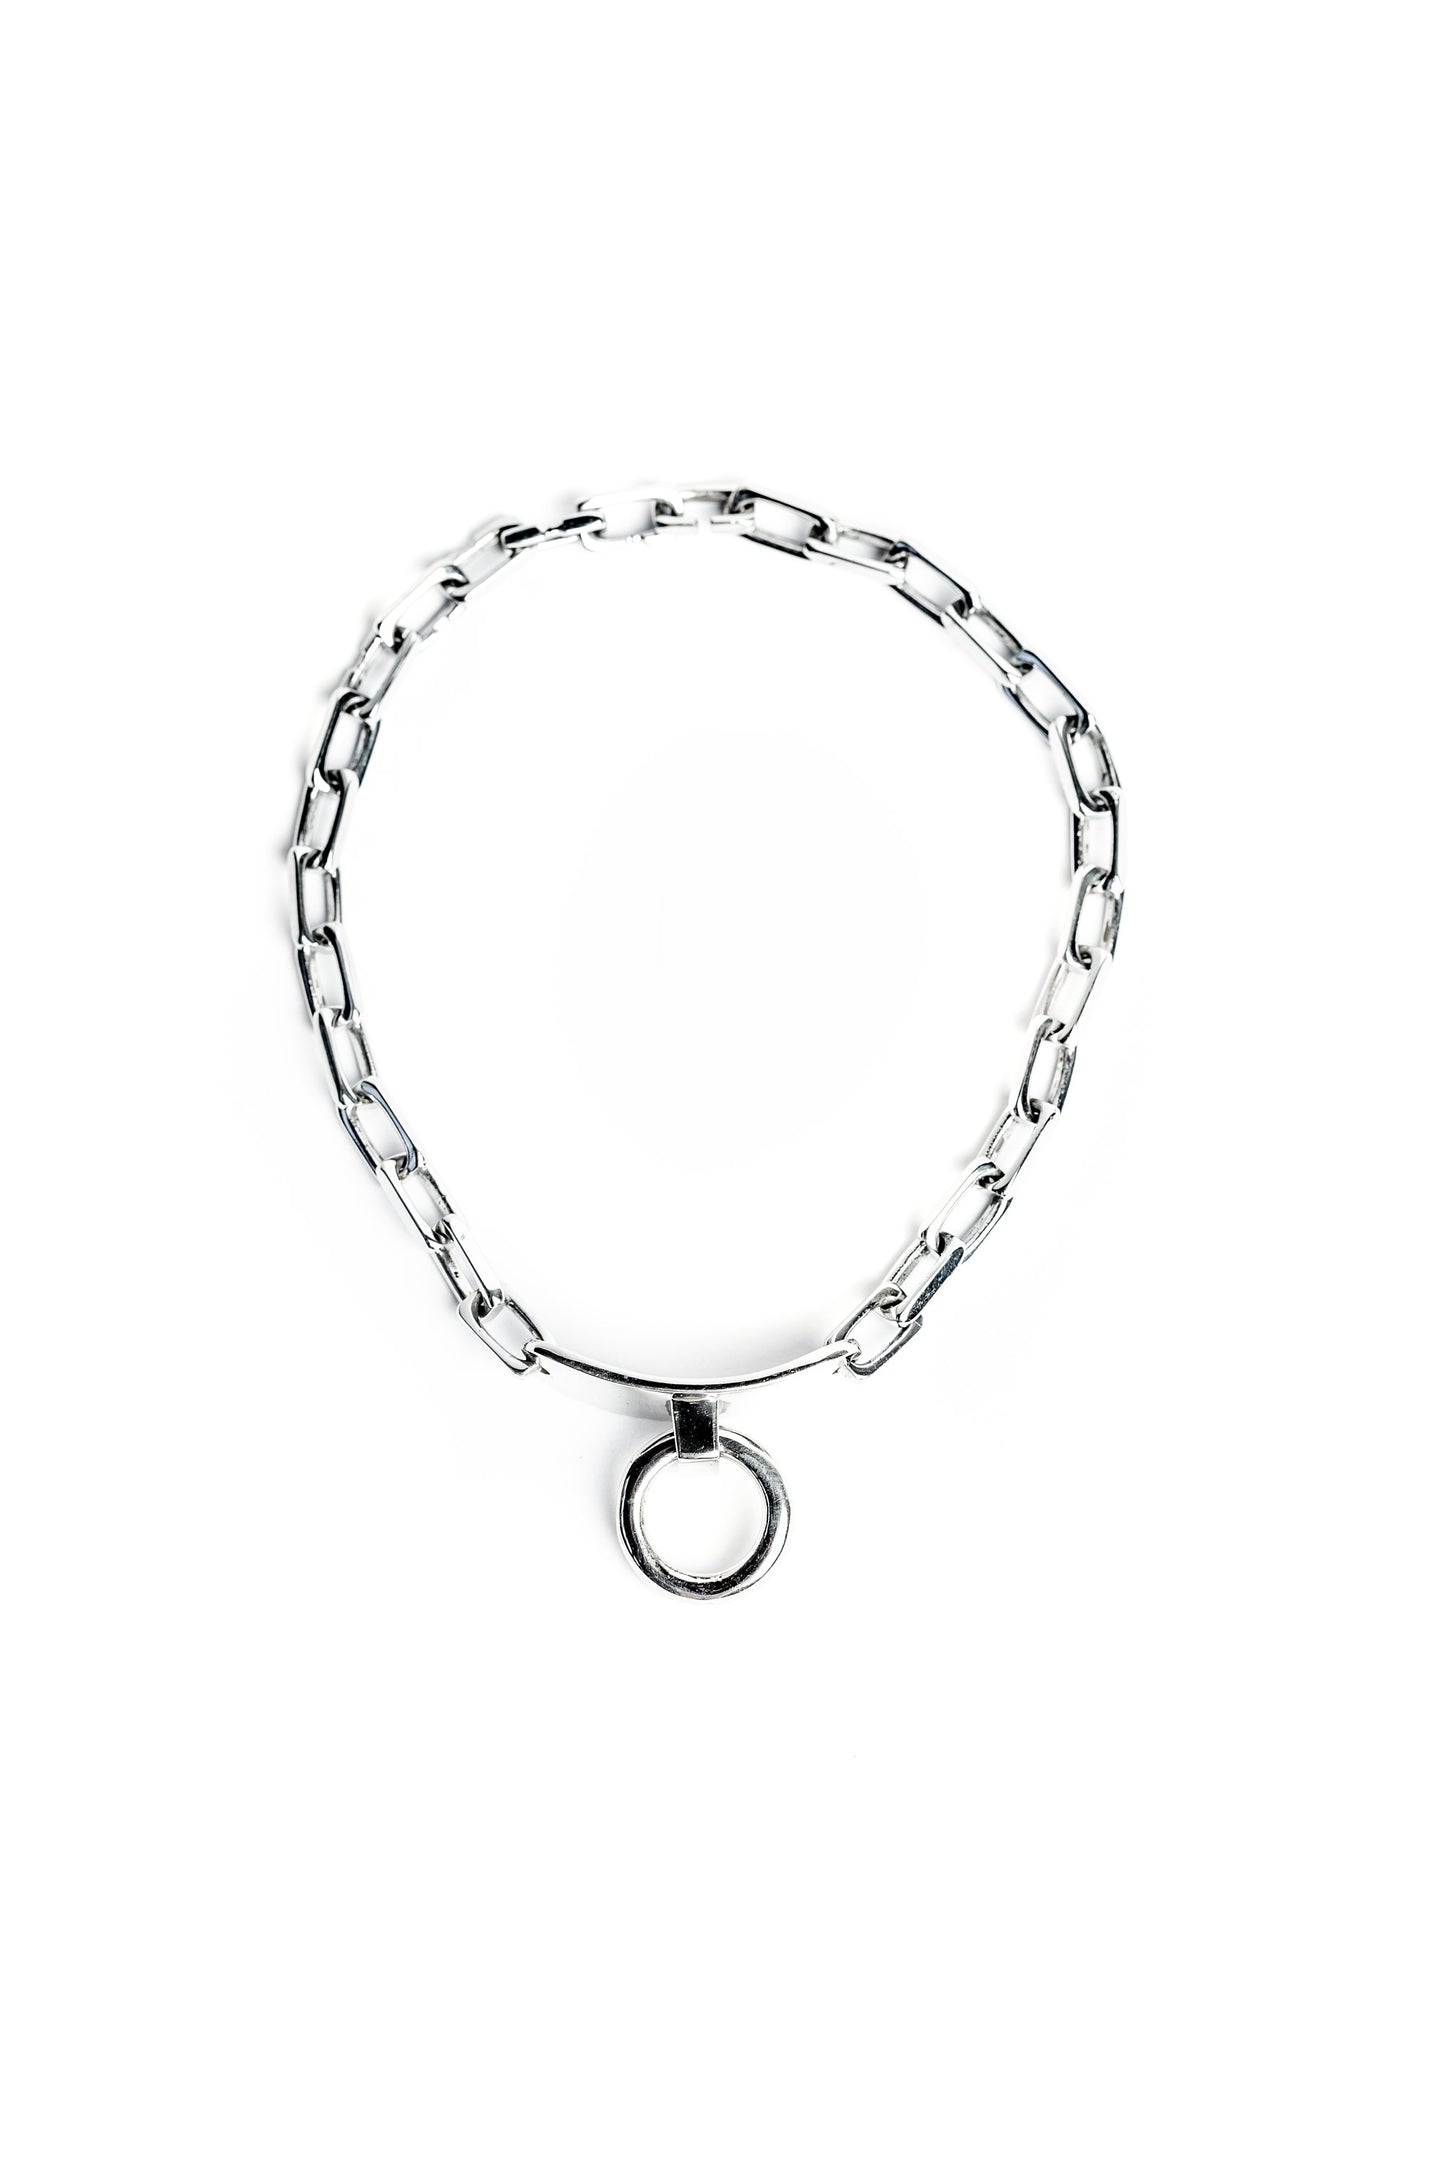 O-Rang Bracelet and Chain Choker